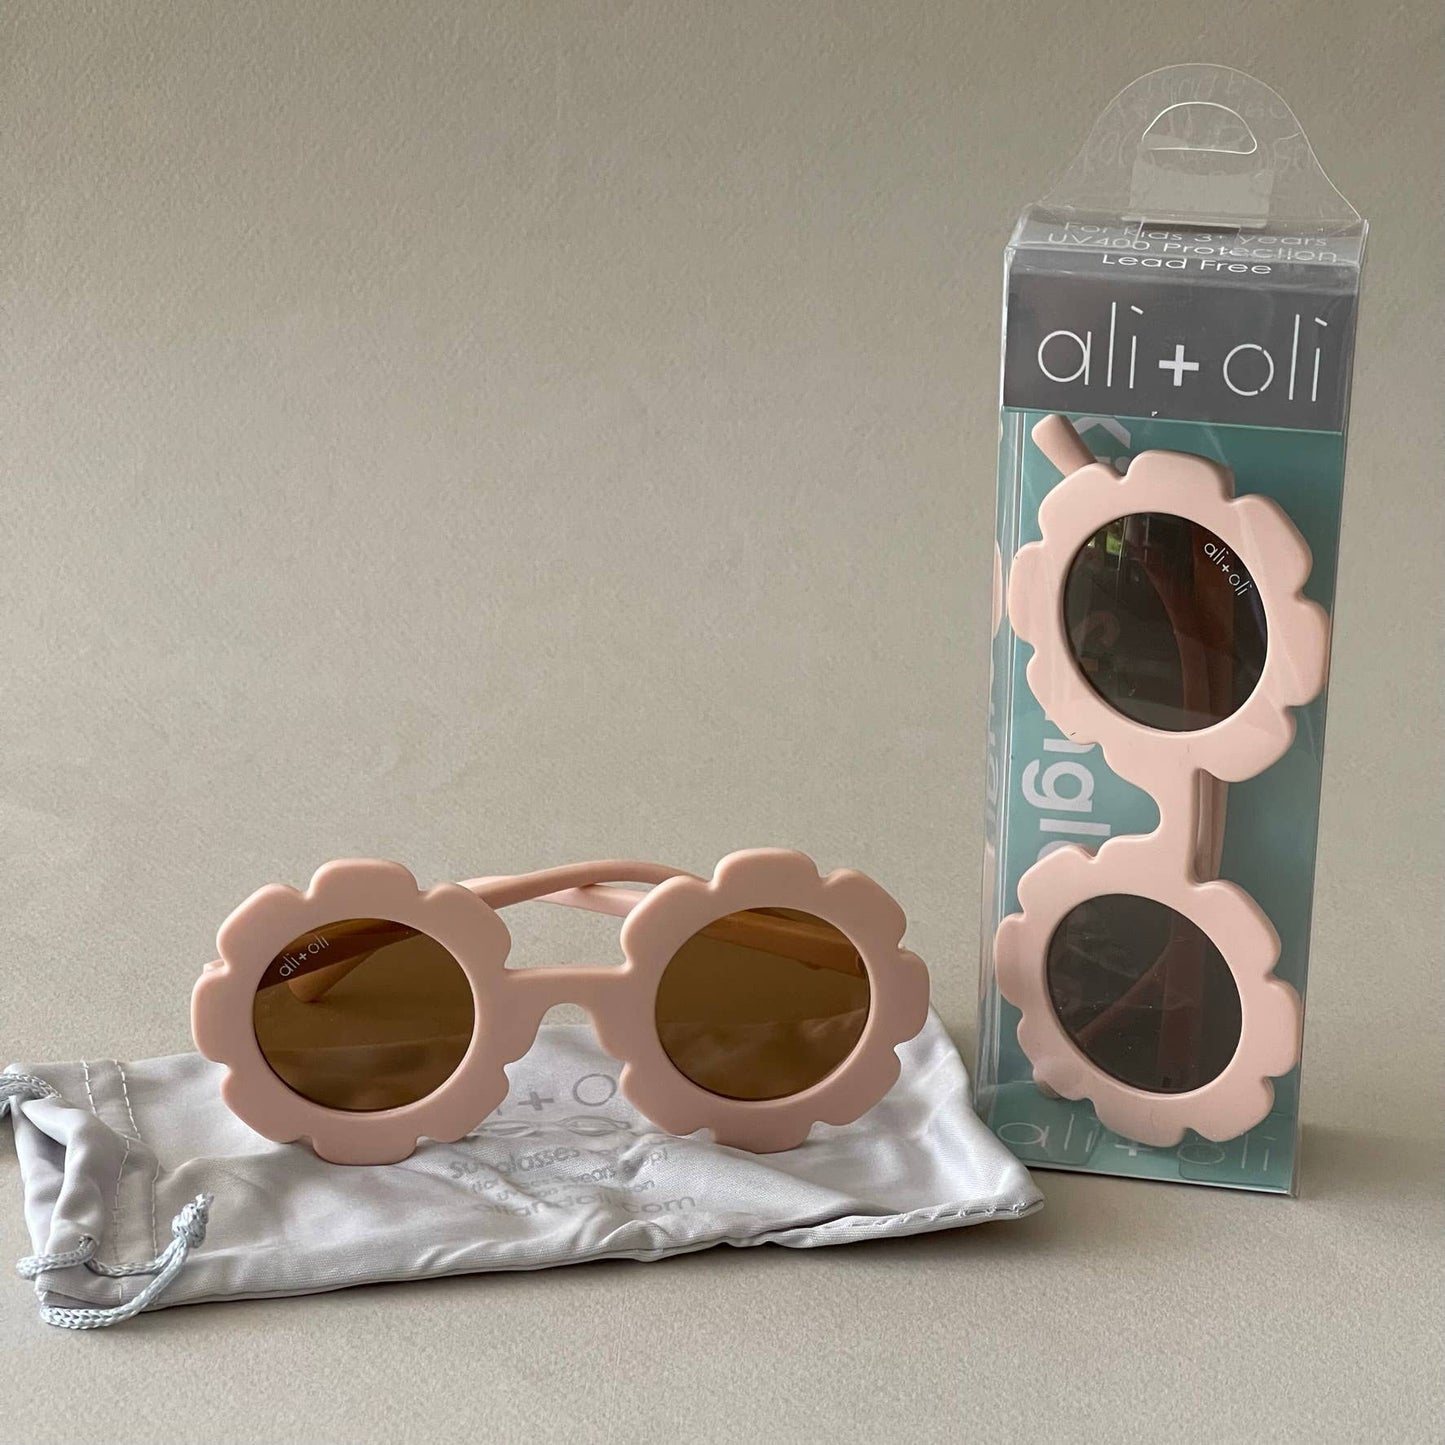 Sunglasses for Kids Flower (Pink)